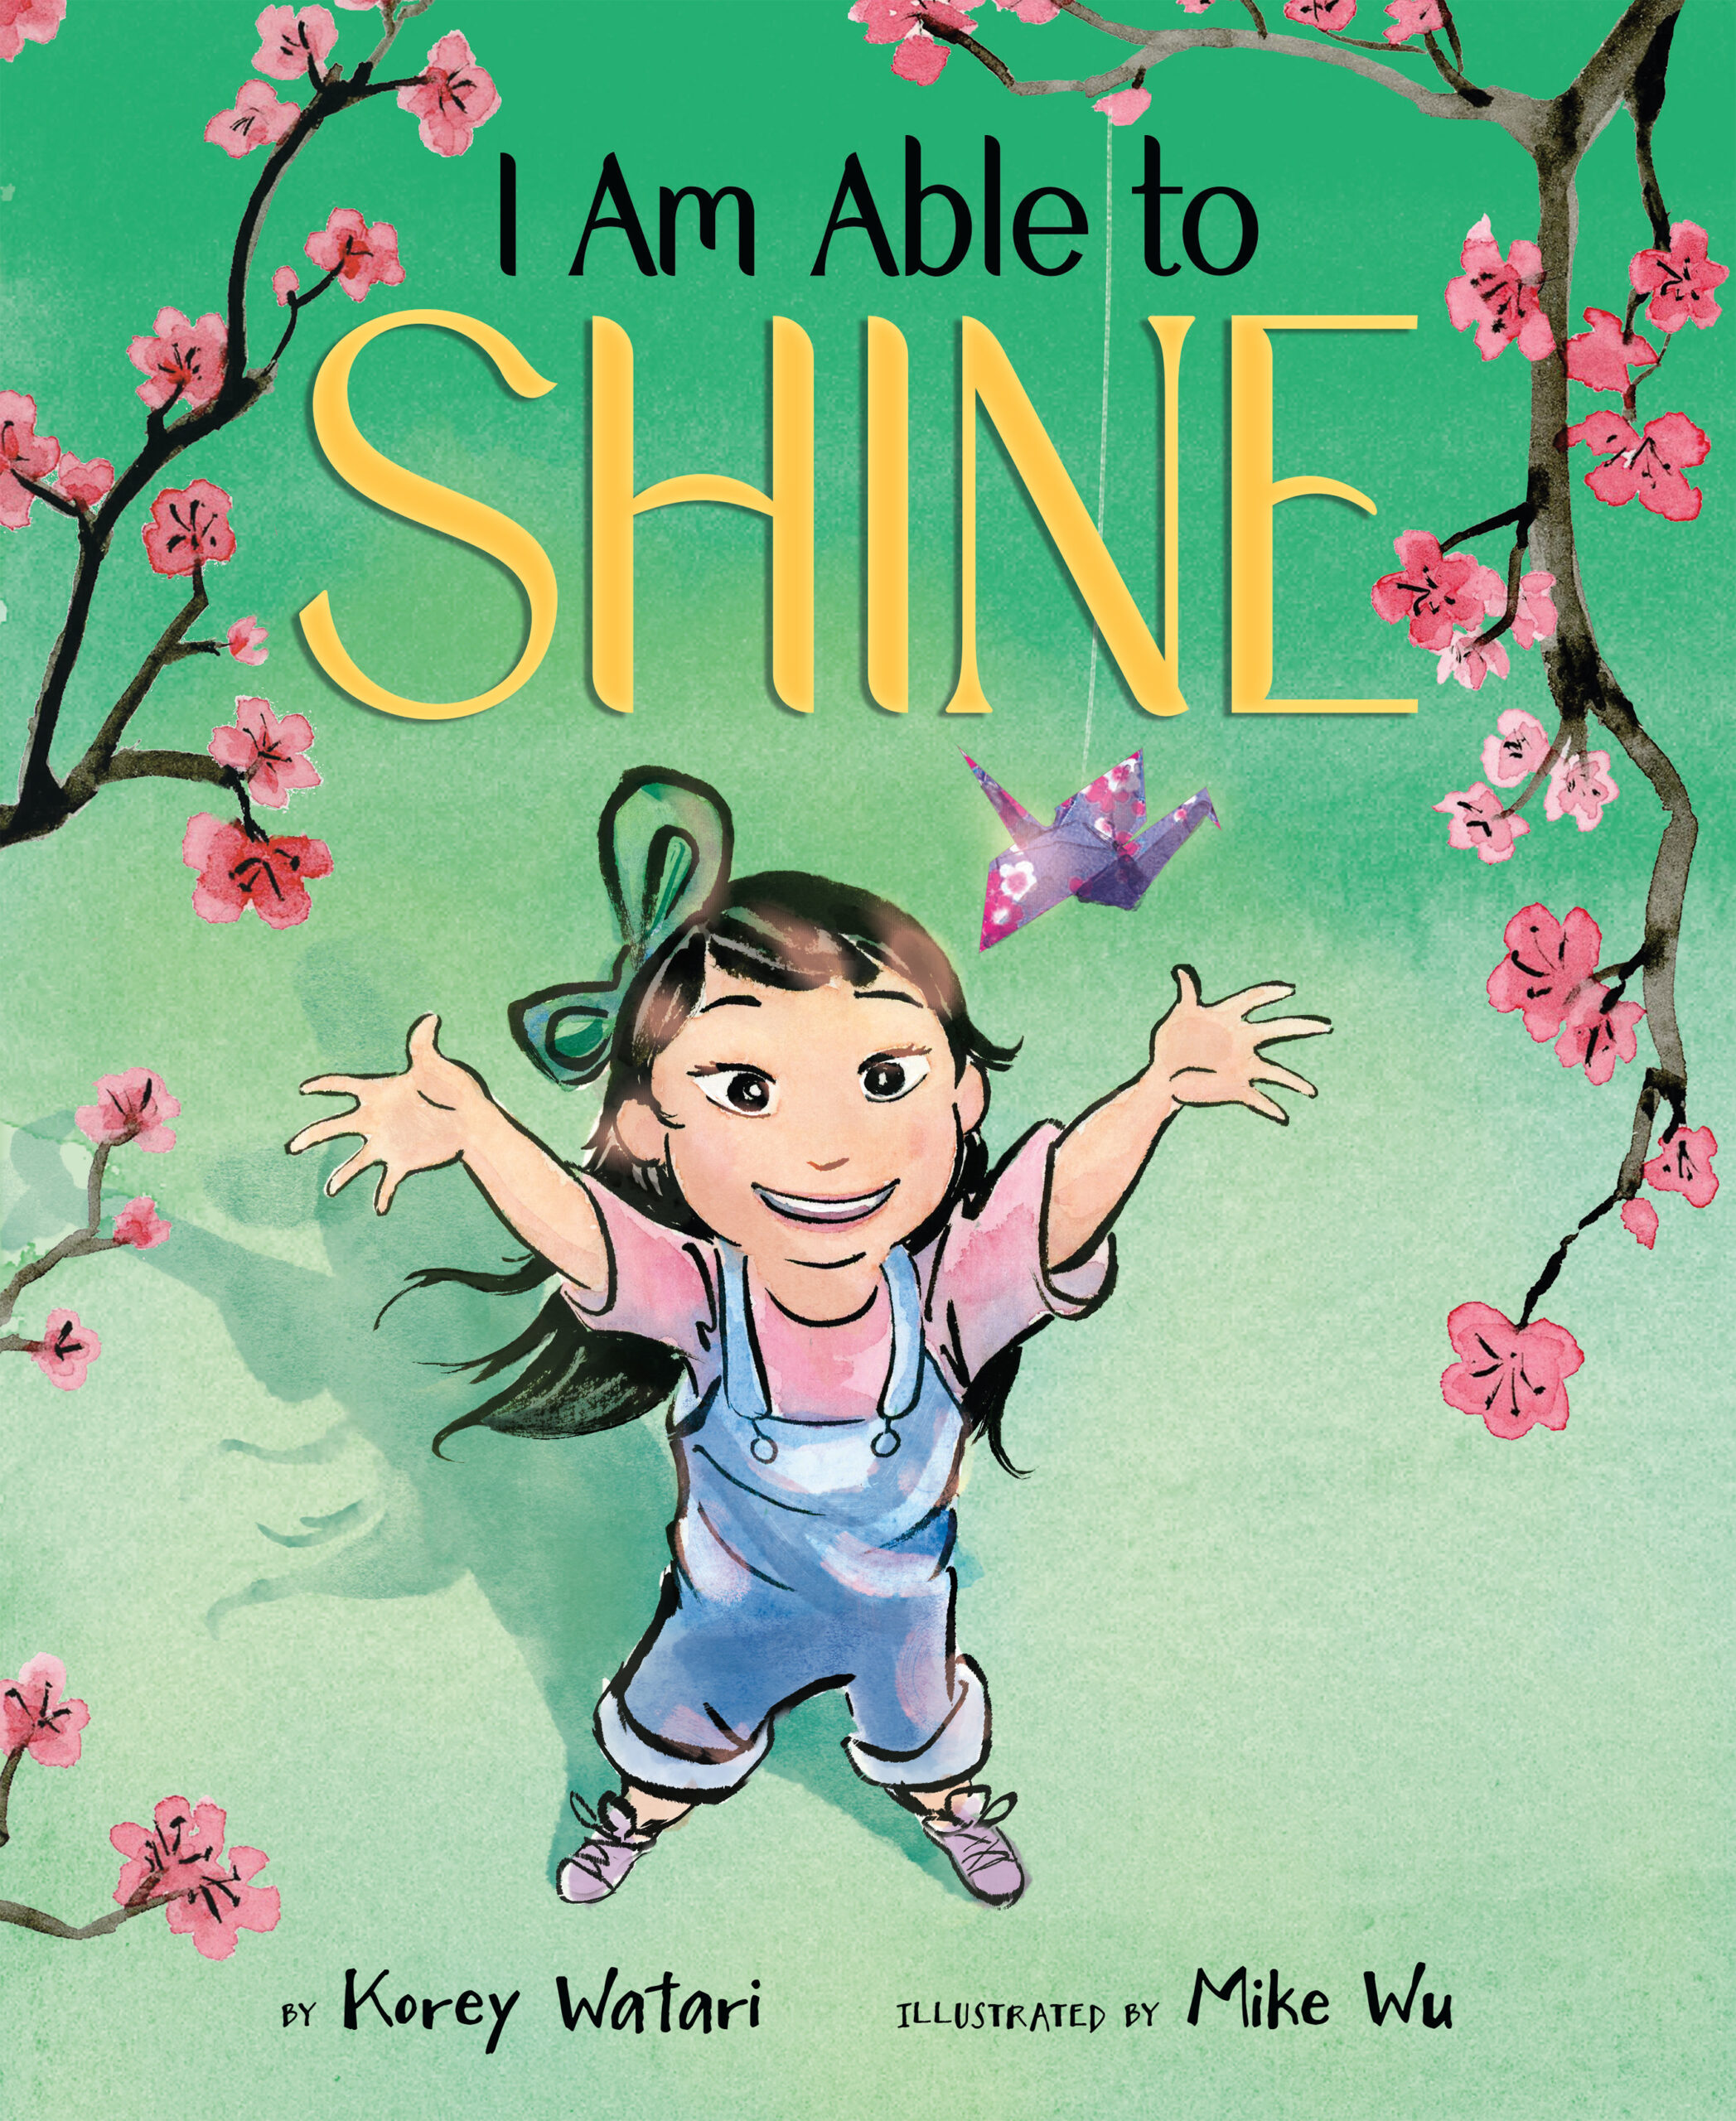 I am able to shine